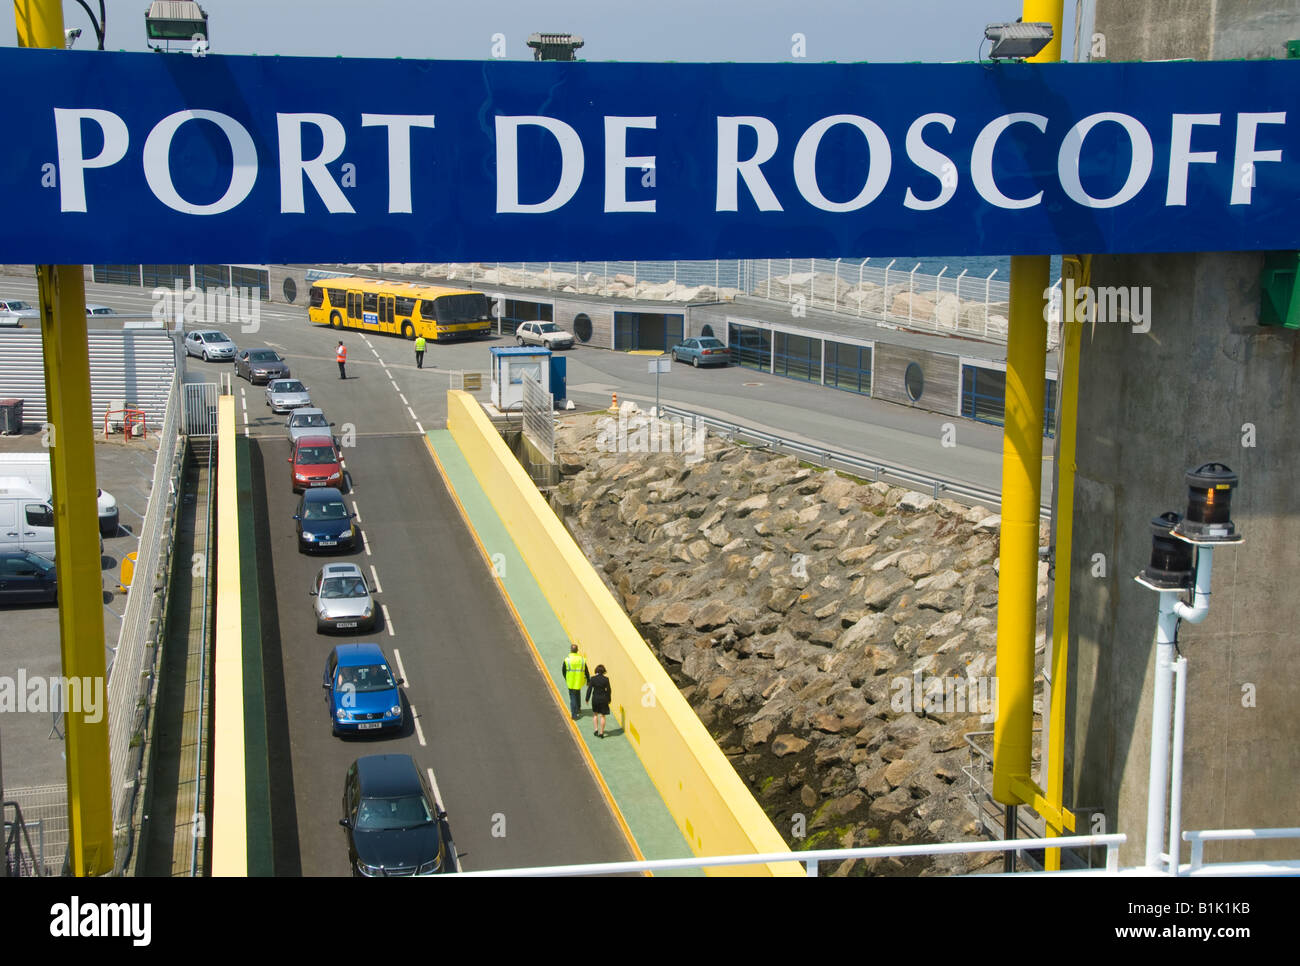 Port De Roscoff in France Stock Photo